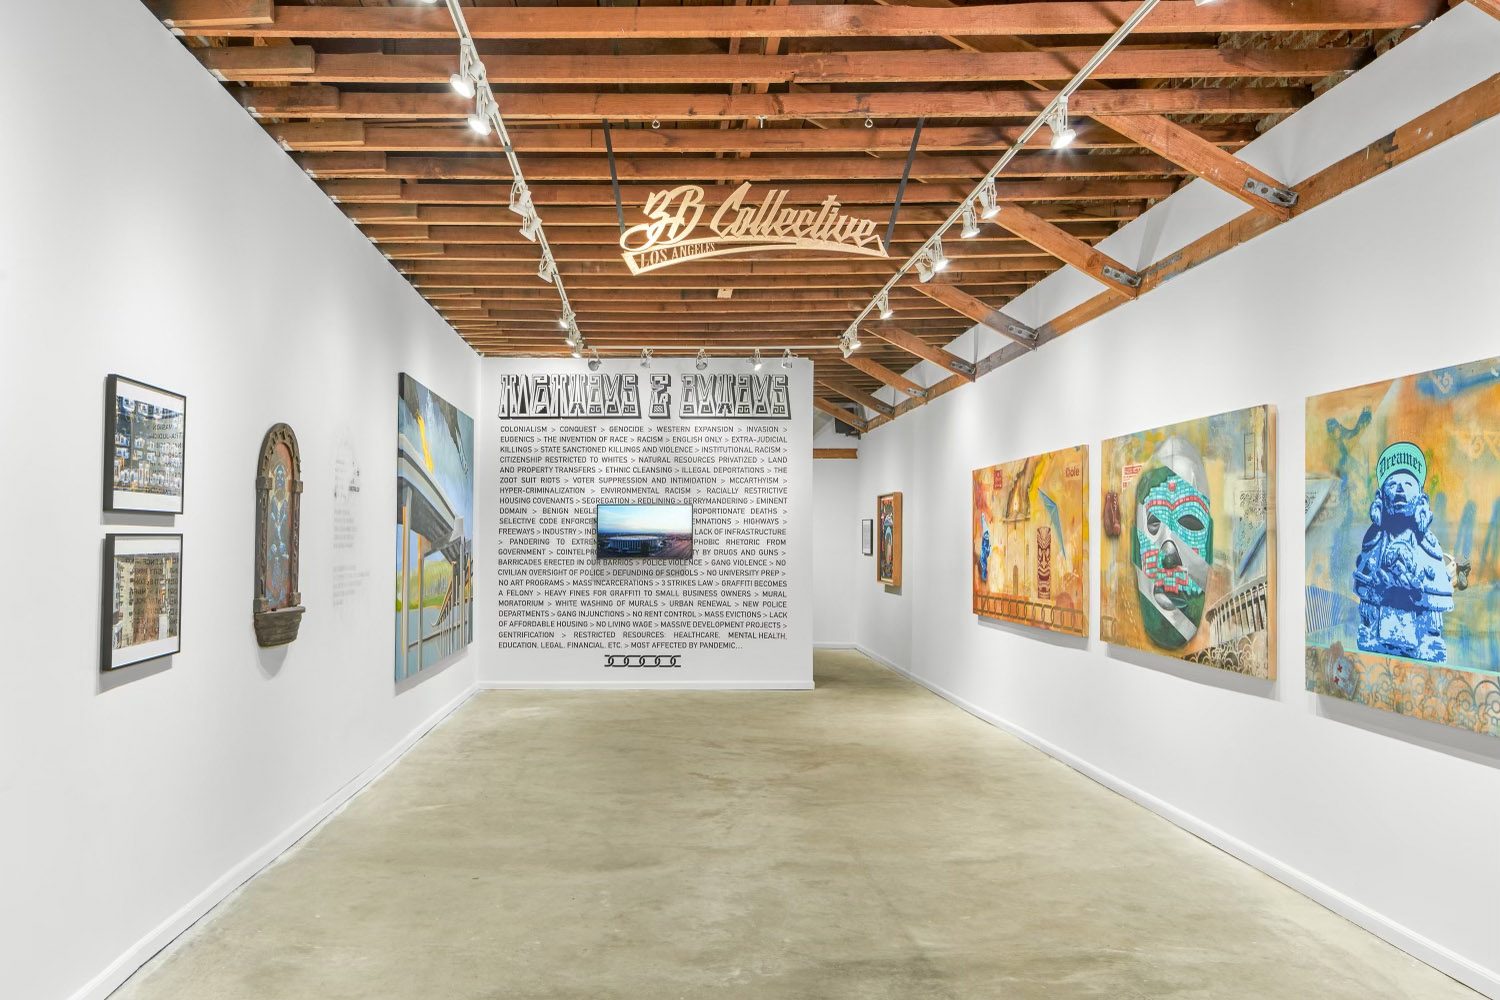 Residency Art Gallery prioritizes BIPOC artists